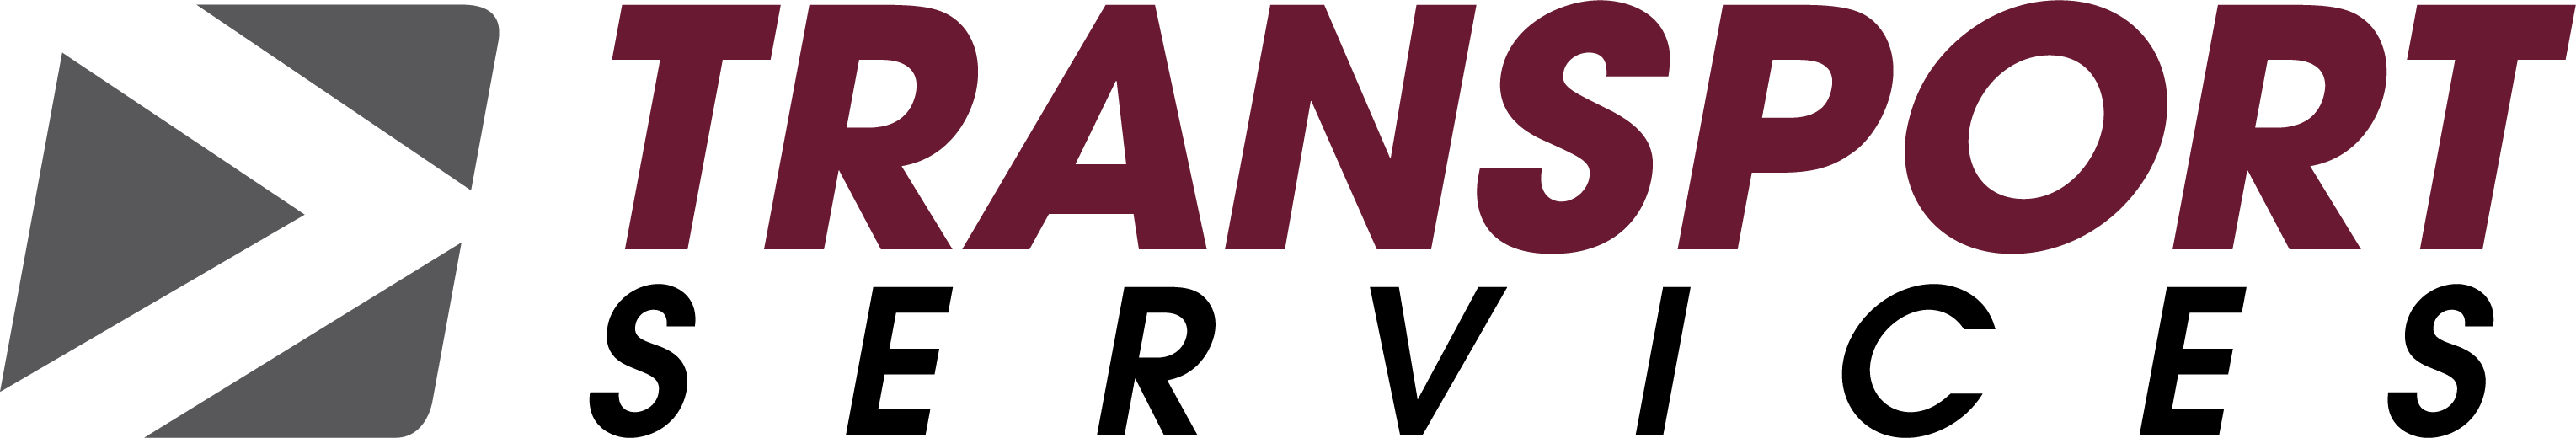 Transport Services logo